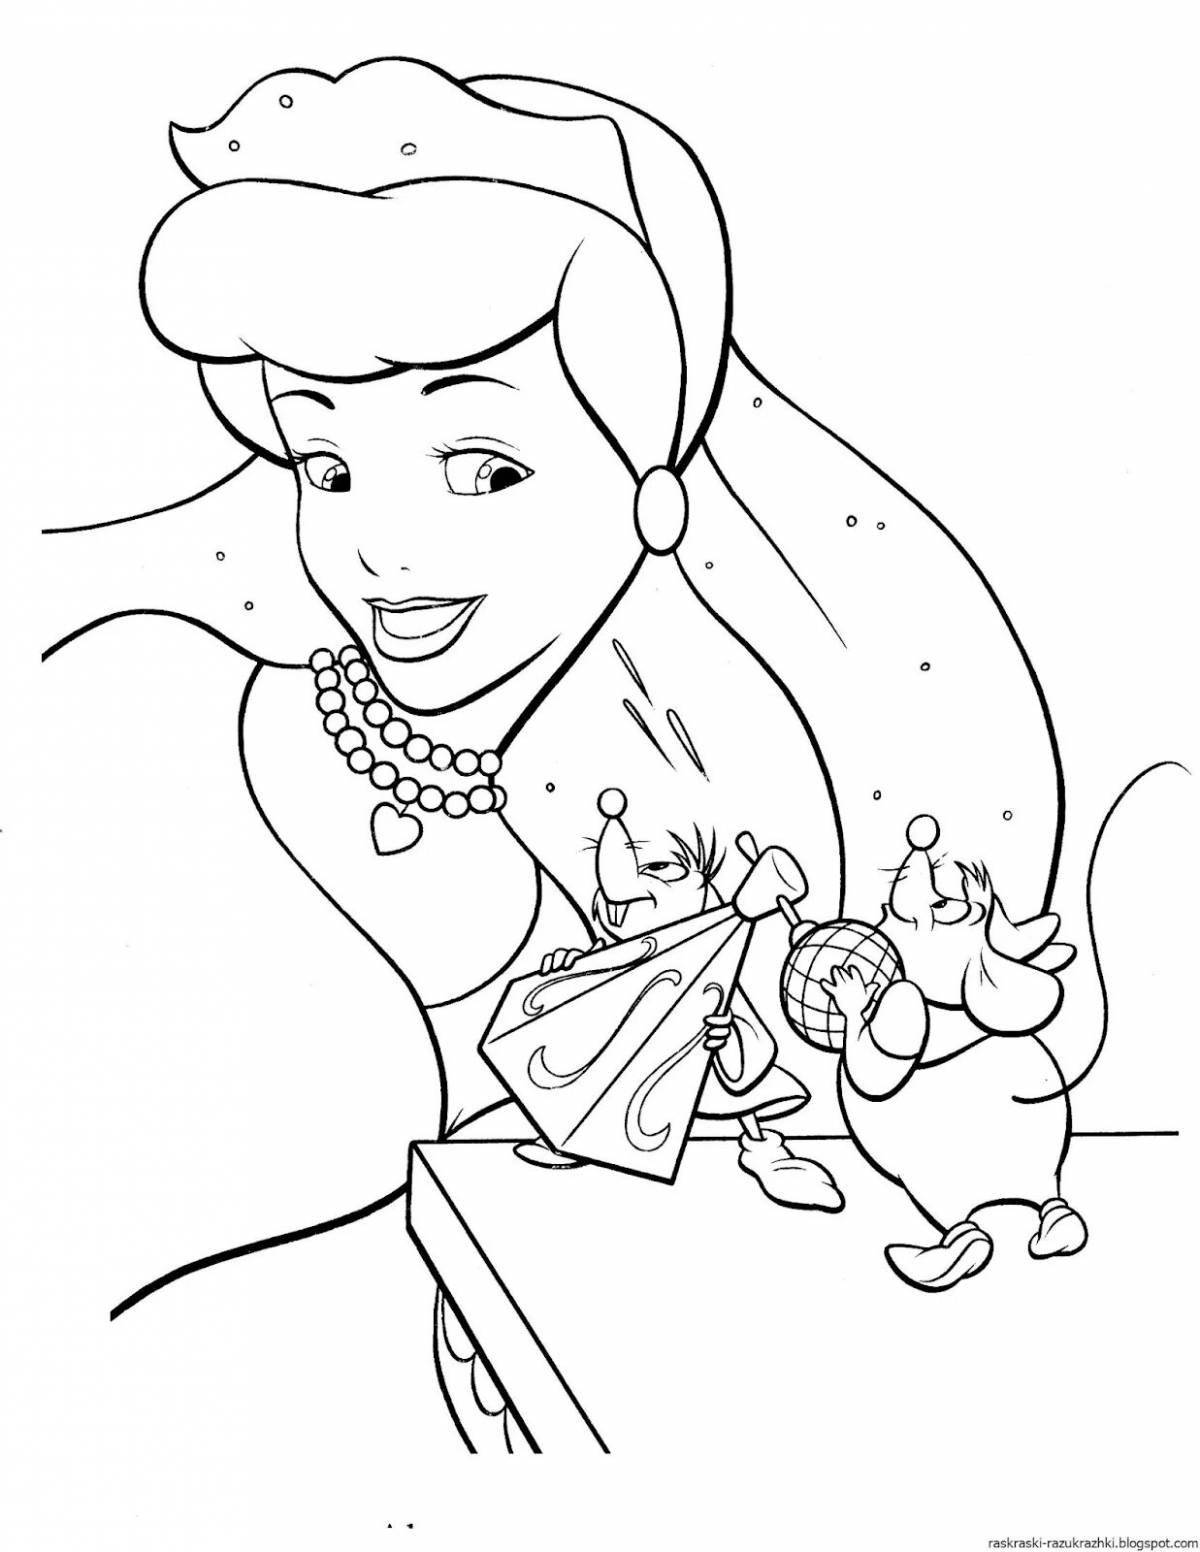 Adorable Cinderella coloring book for kids